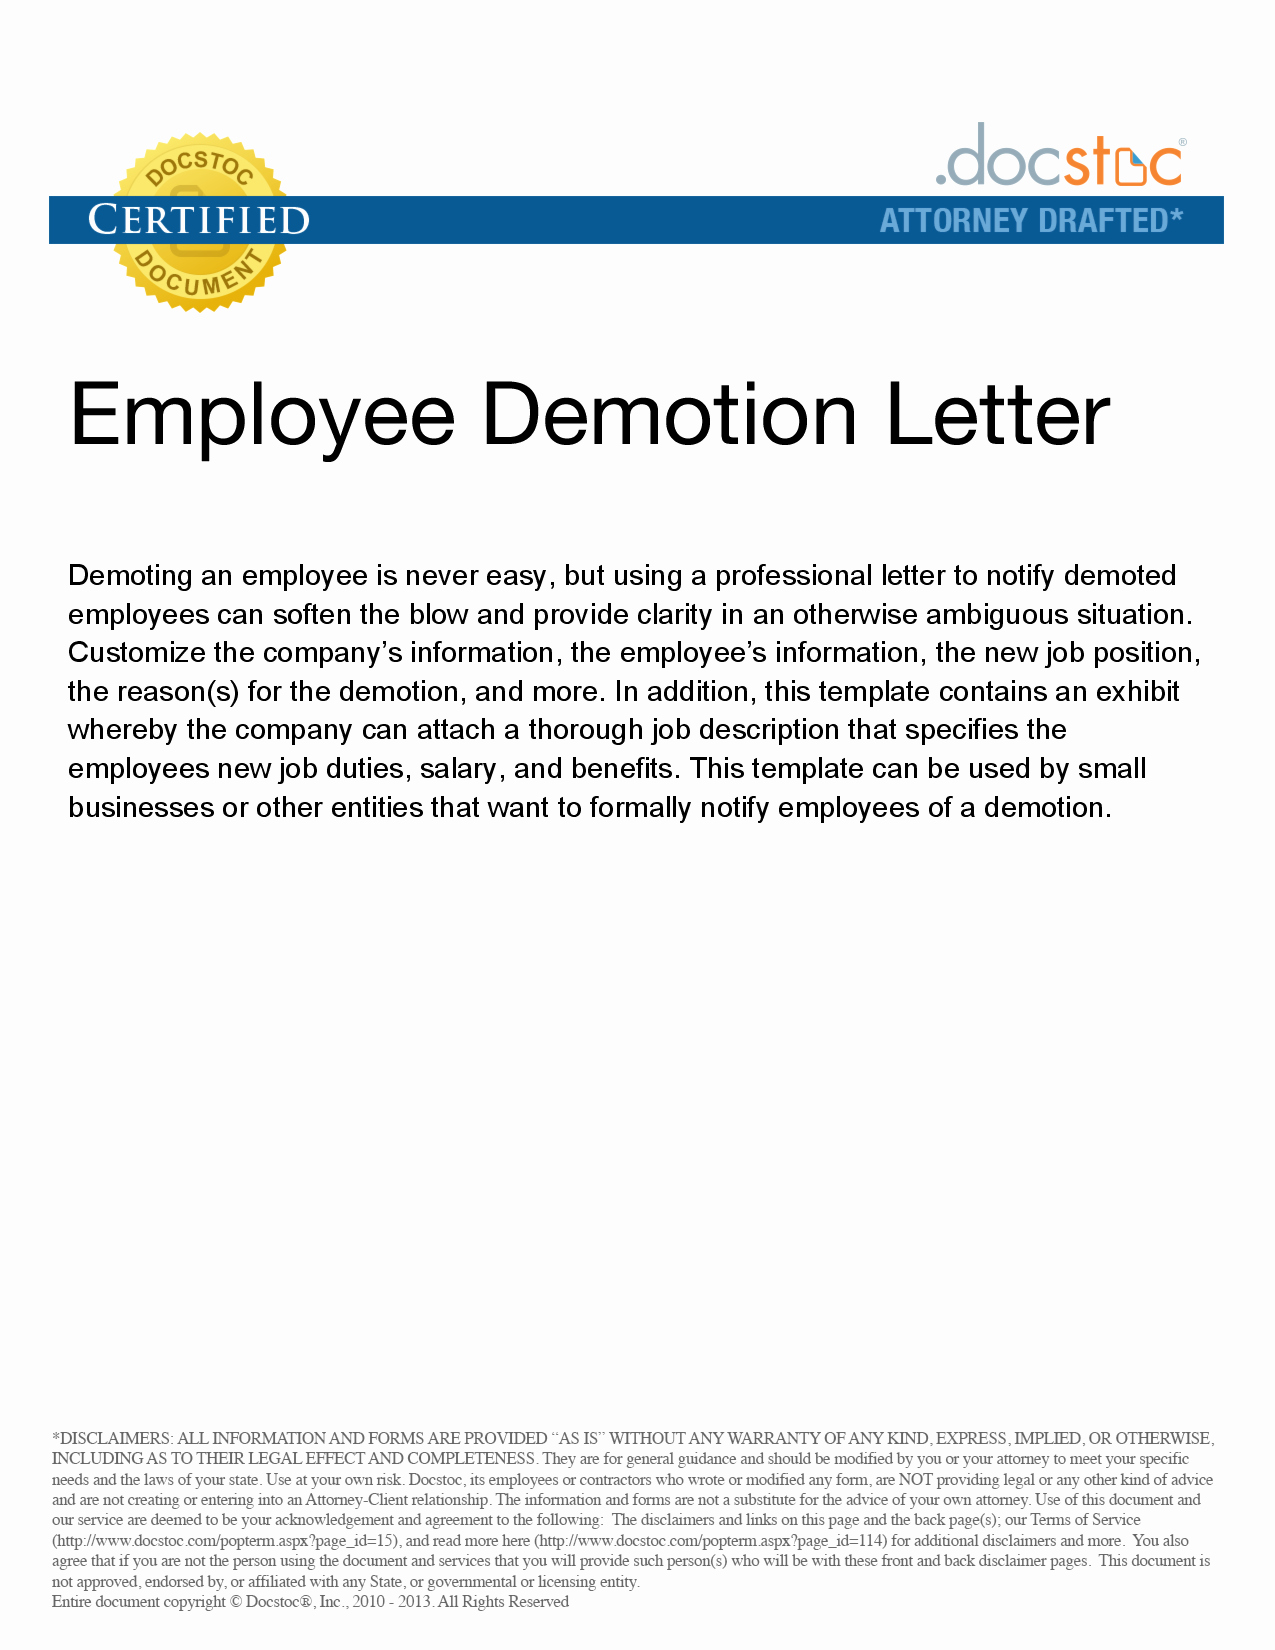 Demotion Letter Template